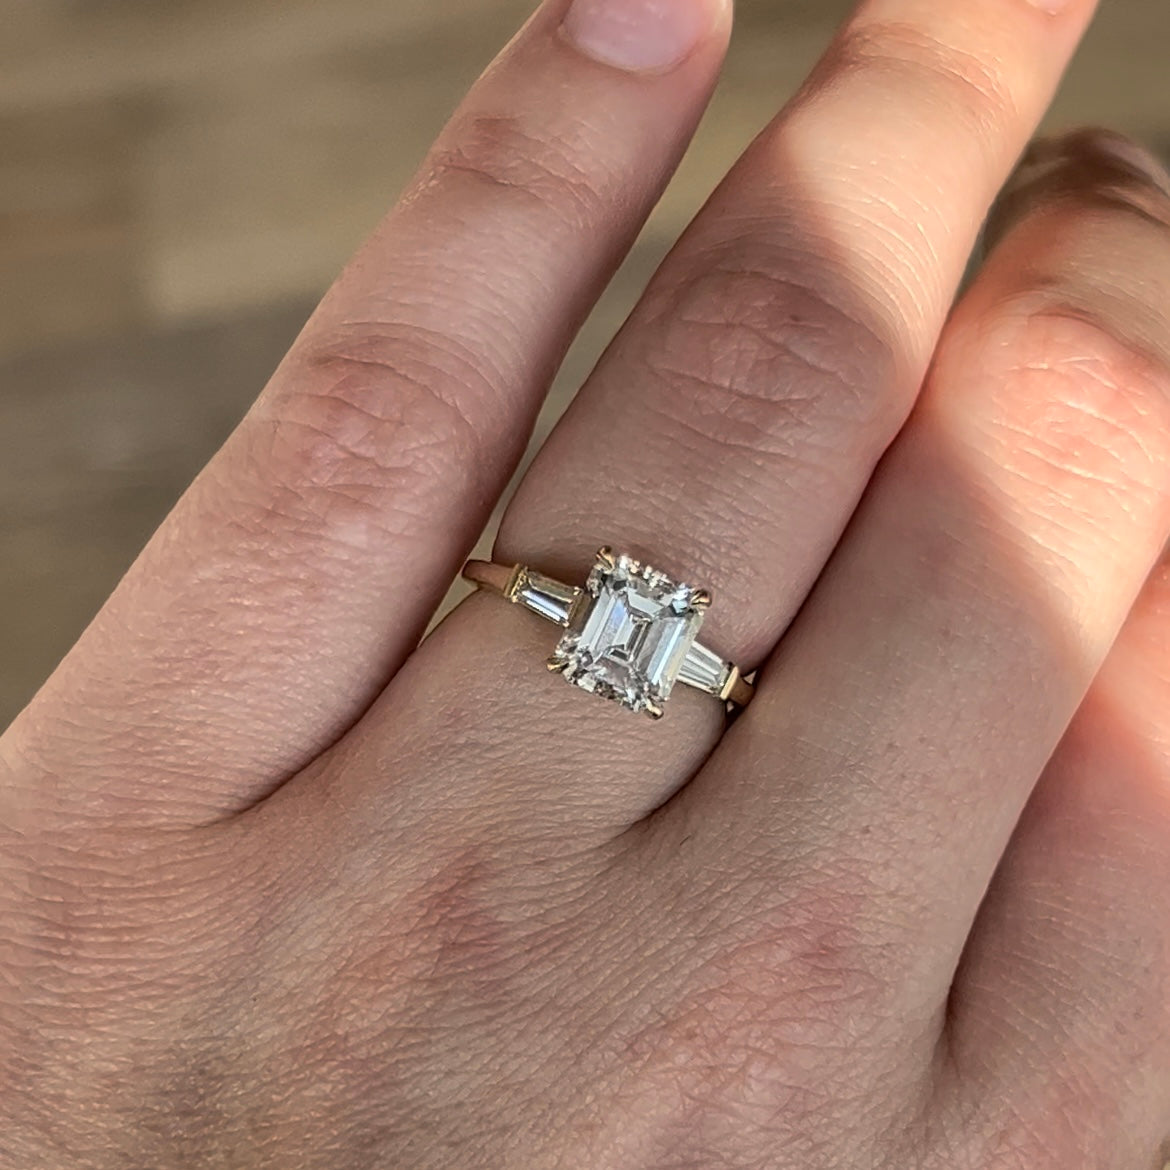 Tiffany Novo® Emerald-cut Engagement Ring with a Pavé Diamond Platinum Band